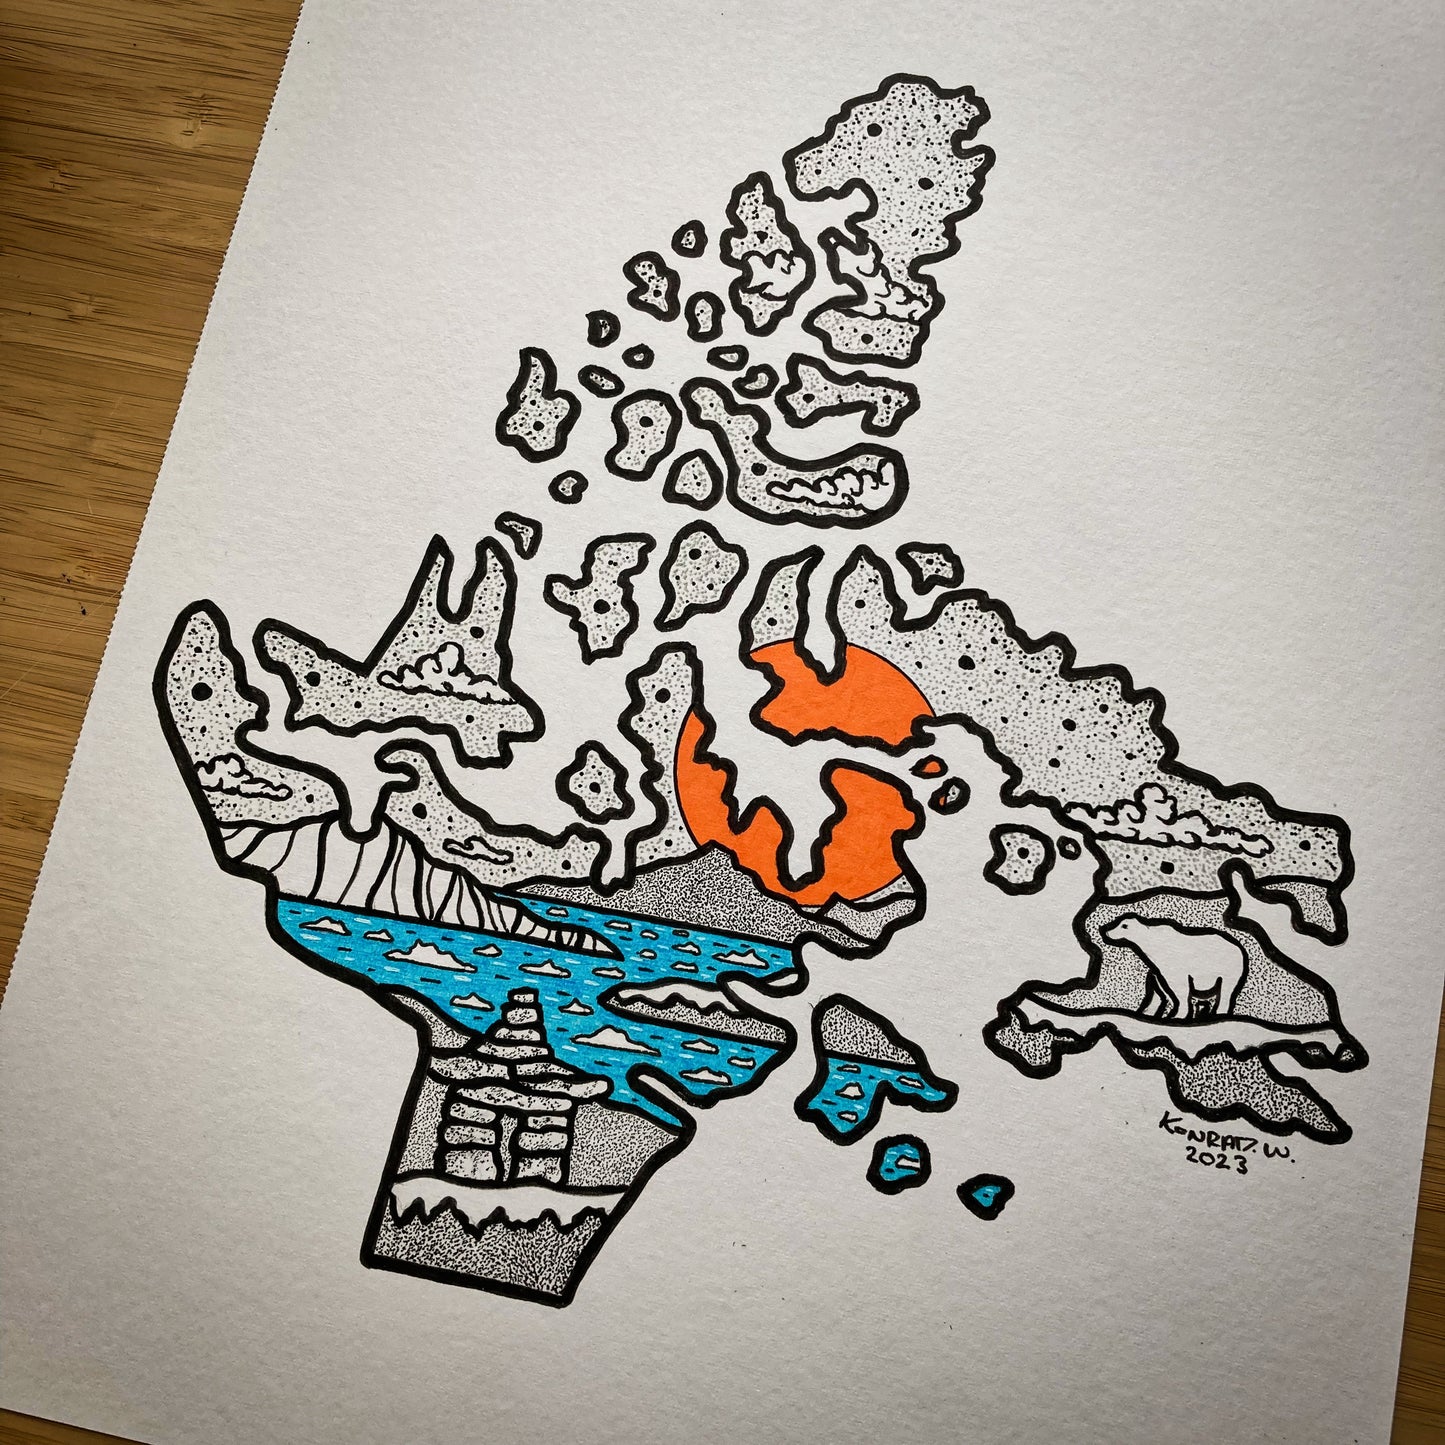 Nunavut Territory - 11x14 ORIGINAL Pen and Ink Illustration